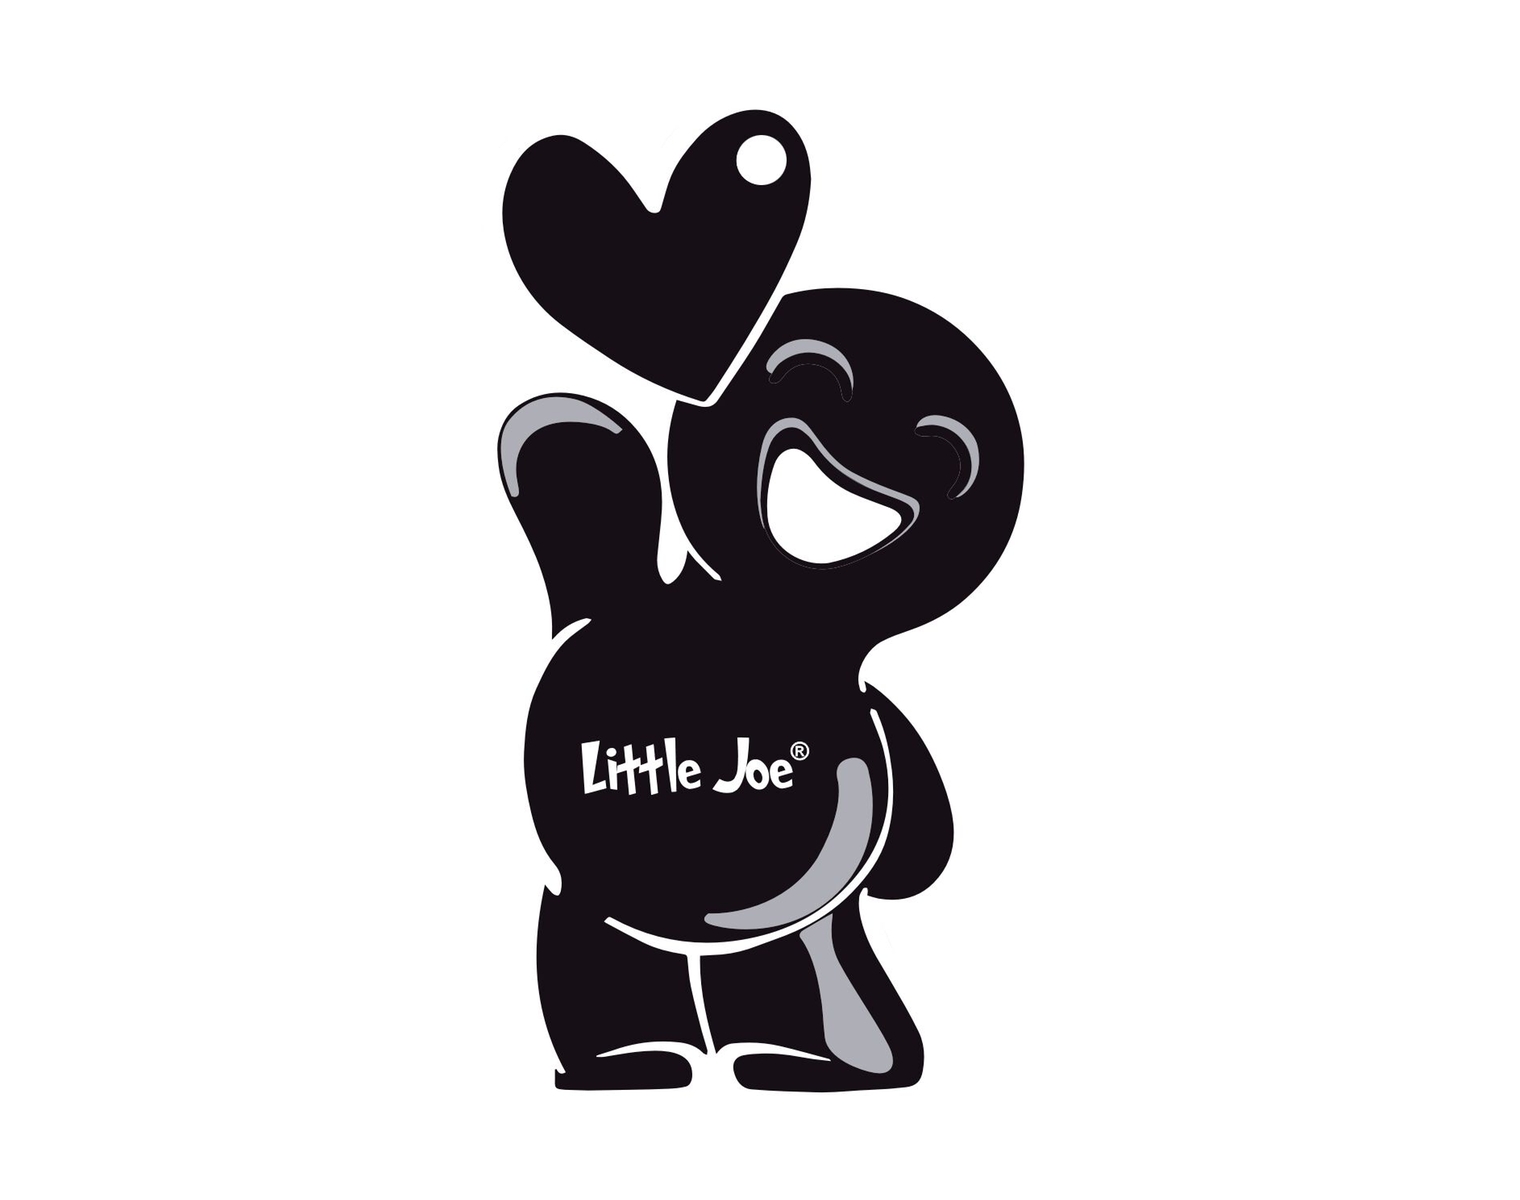 Little Joe Paper Vanille Lufterfrischer